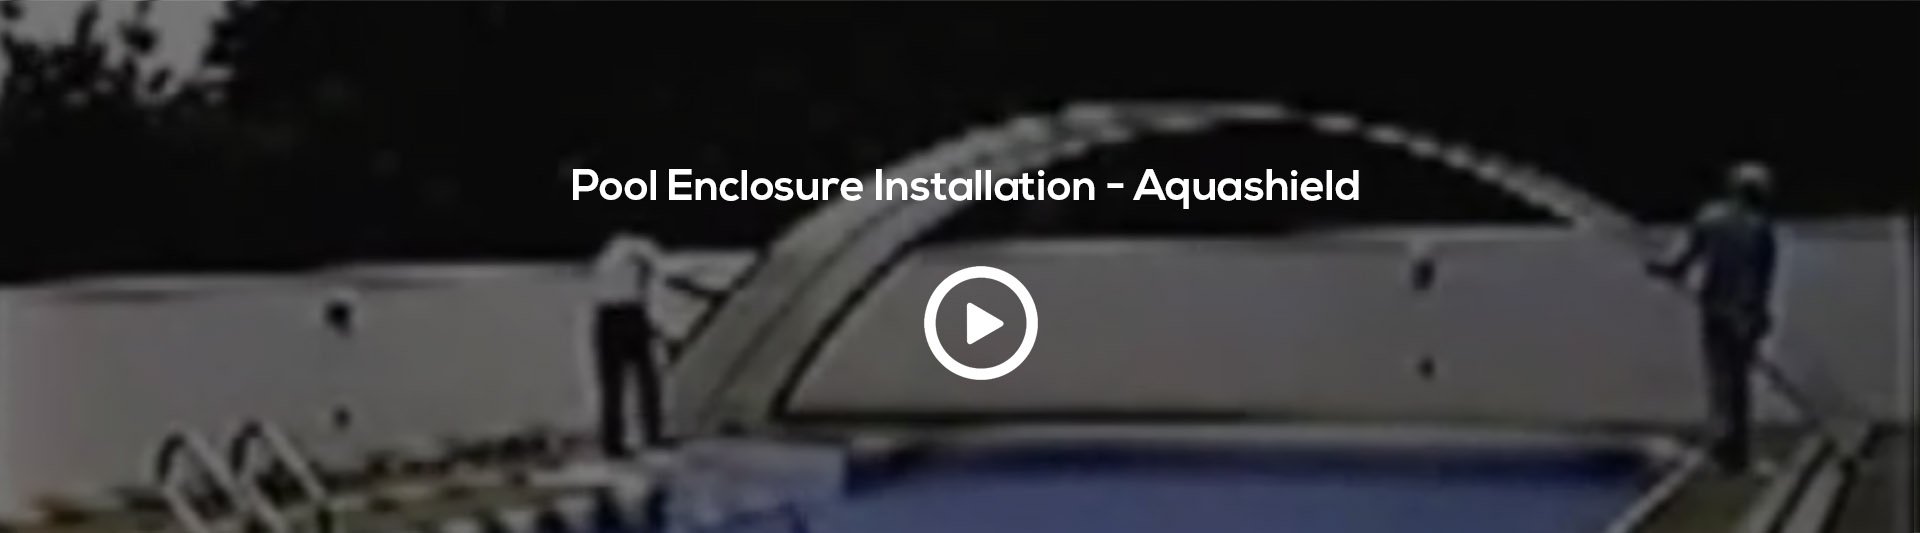 Pool Enclosure Installation